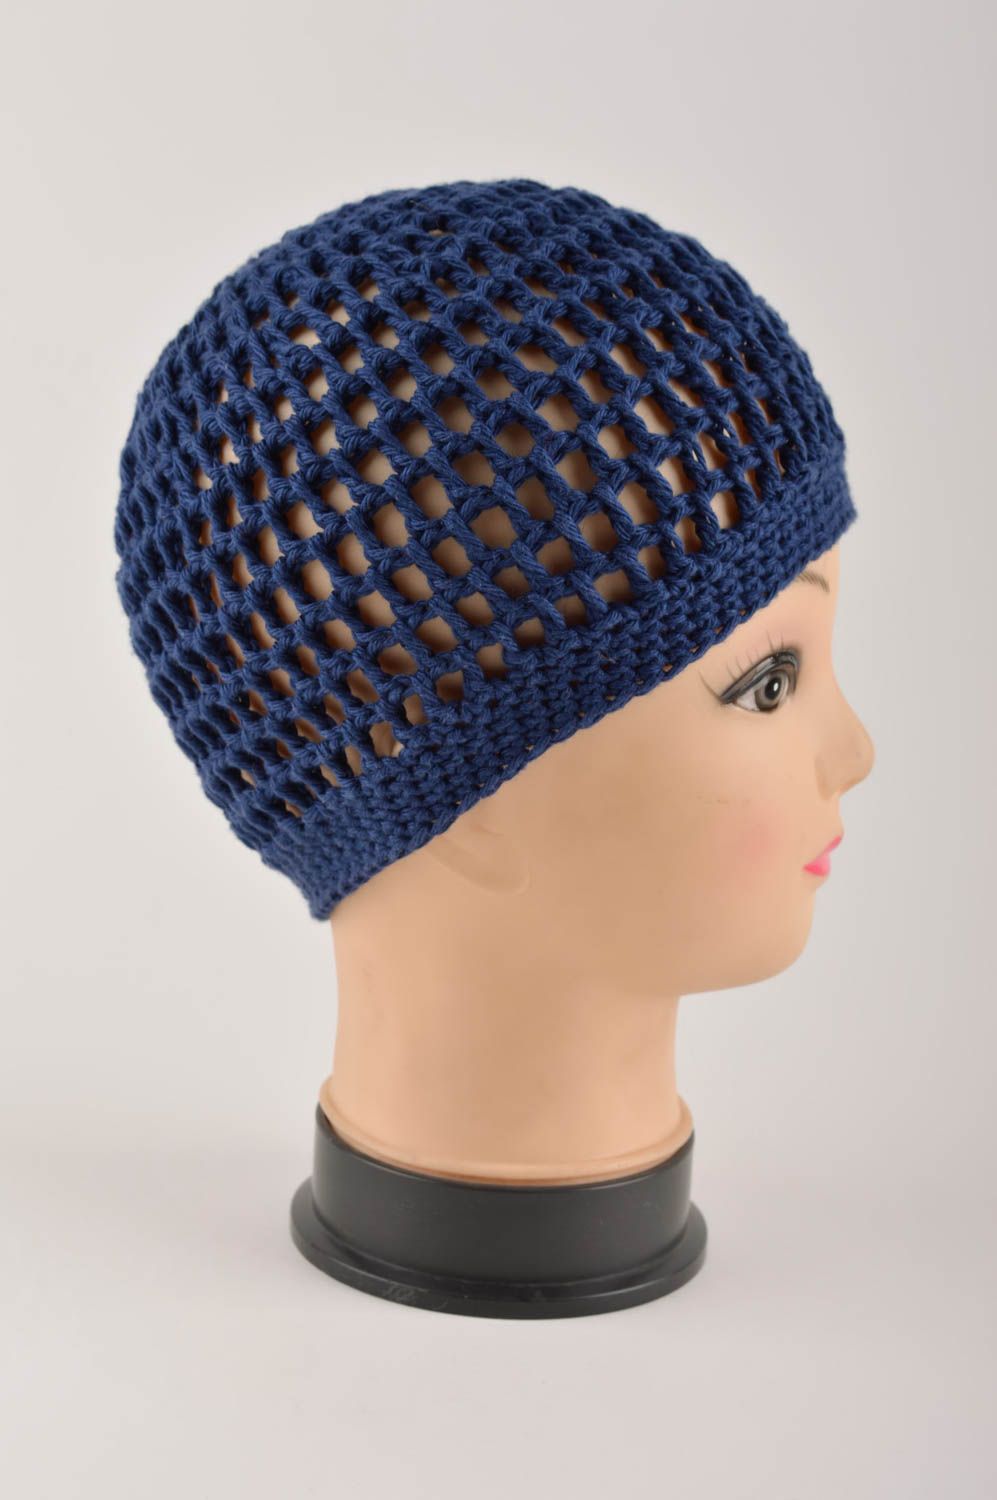 Handmade crochet hat ladies hats womens hats designer accessories gifts for her photo 4